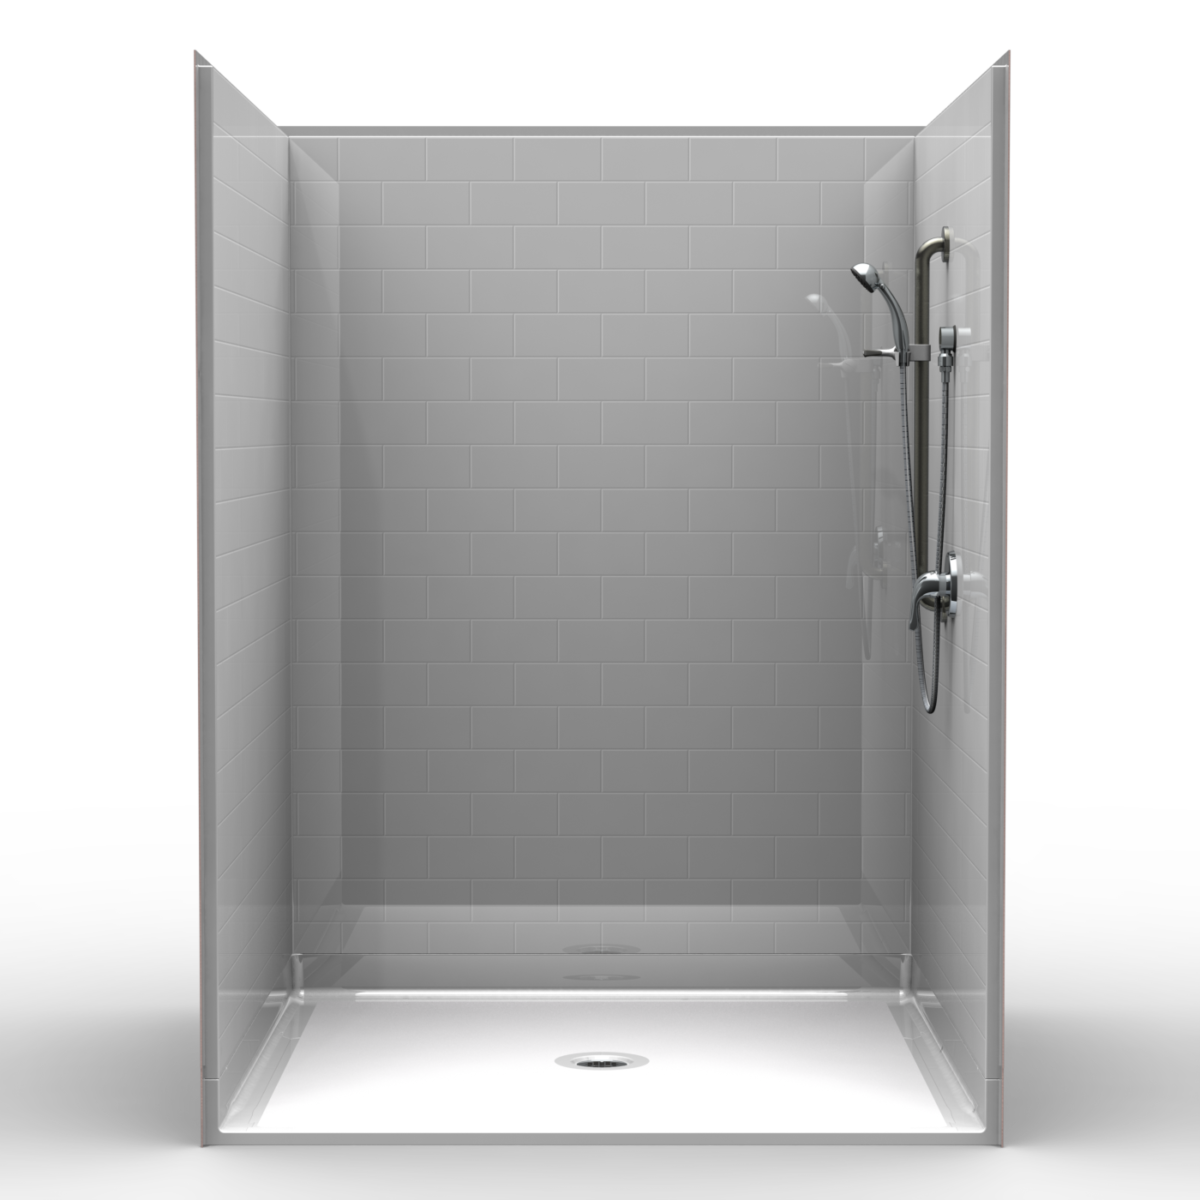 4LBS6060FB1B, Four Piece 60” x 60” Roll in Shower, 1” Threshold, Centre Drain